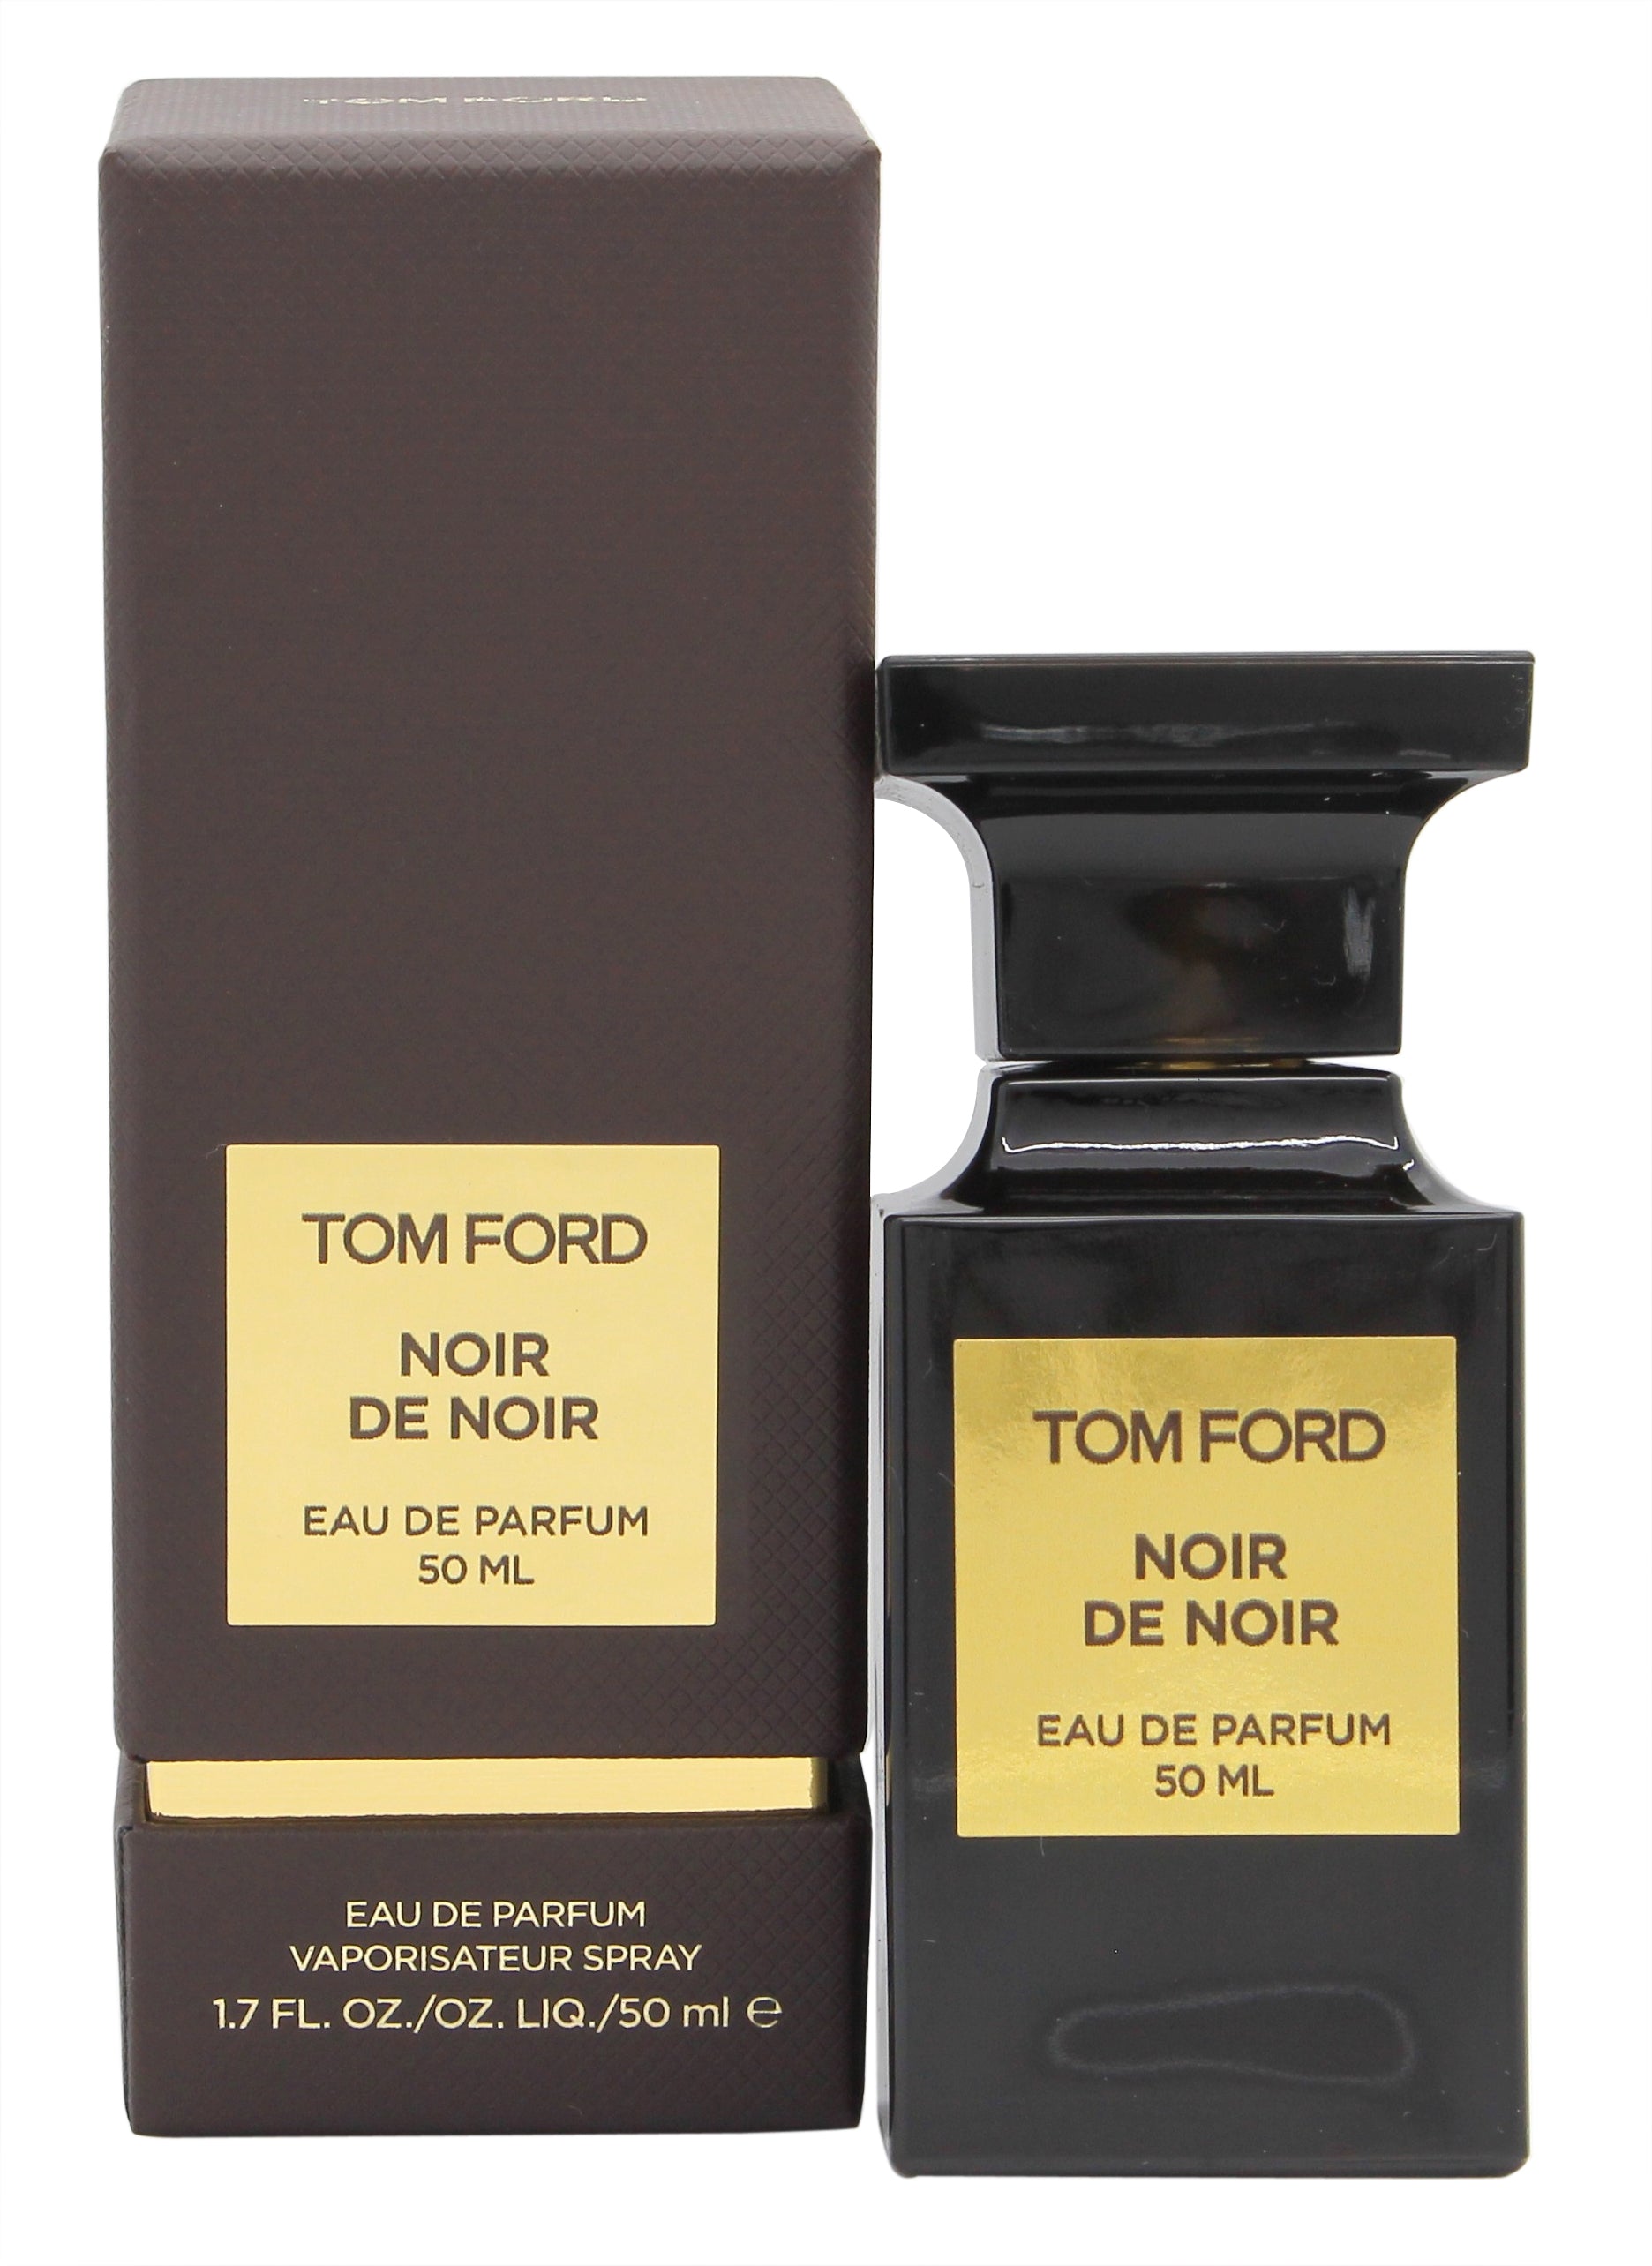 View Tom Ford Noir de Noir Eau de Parfum 50ml Spray information